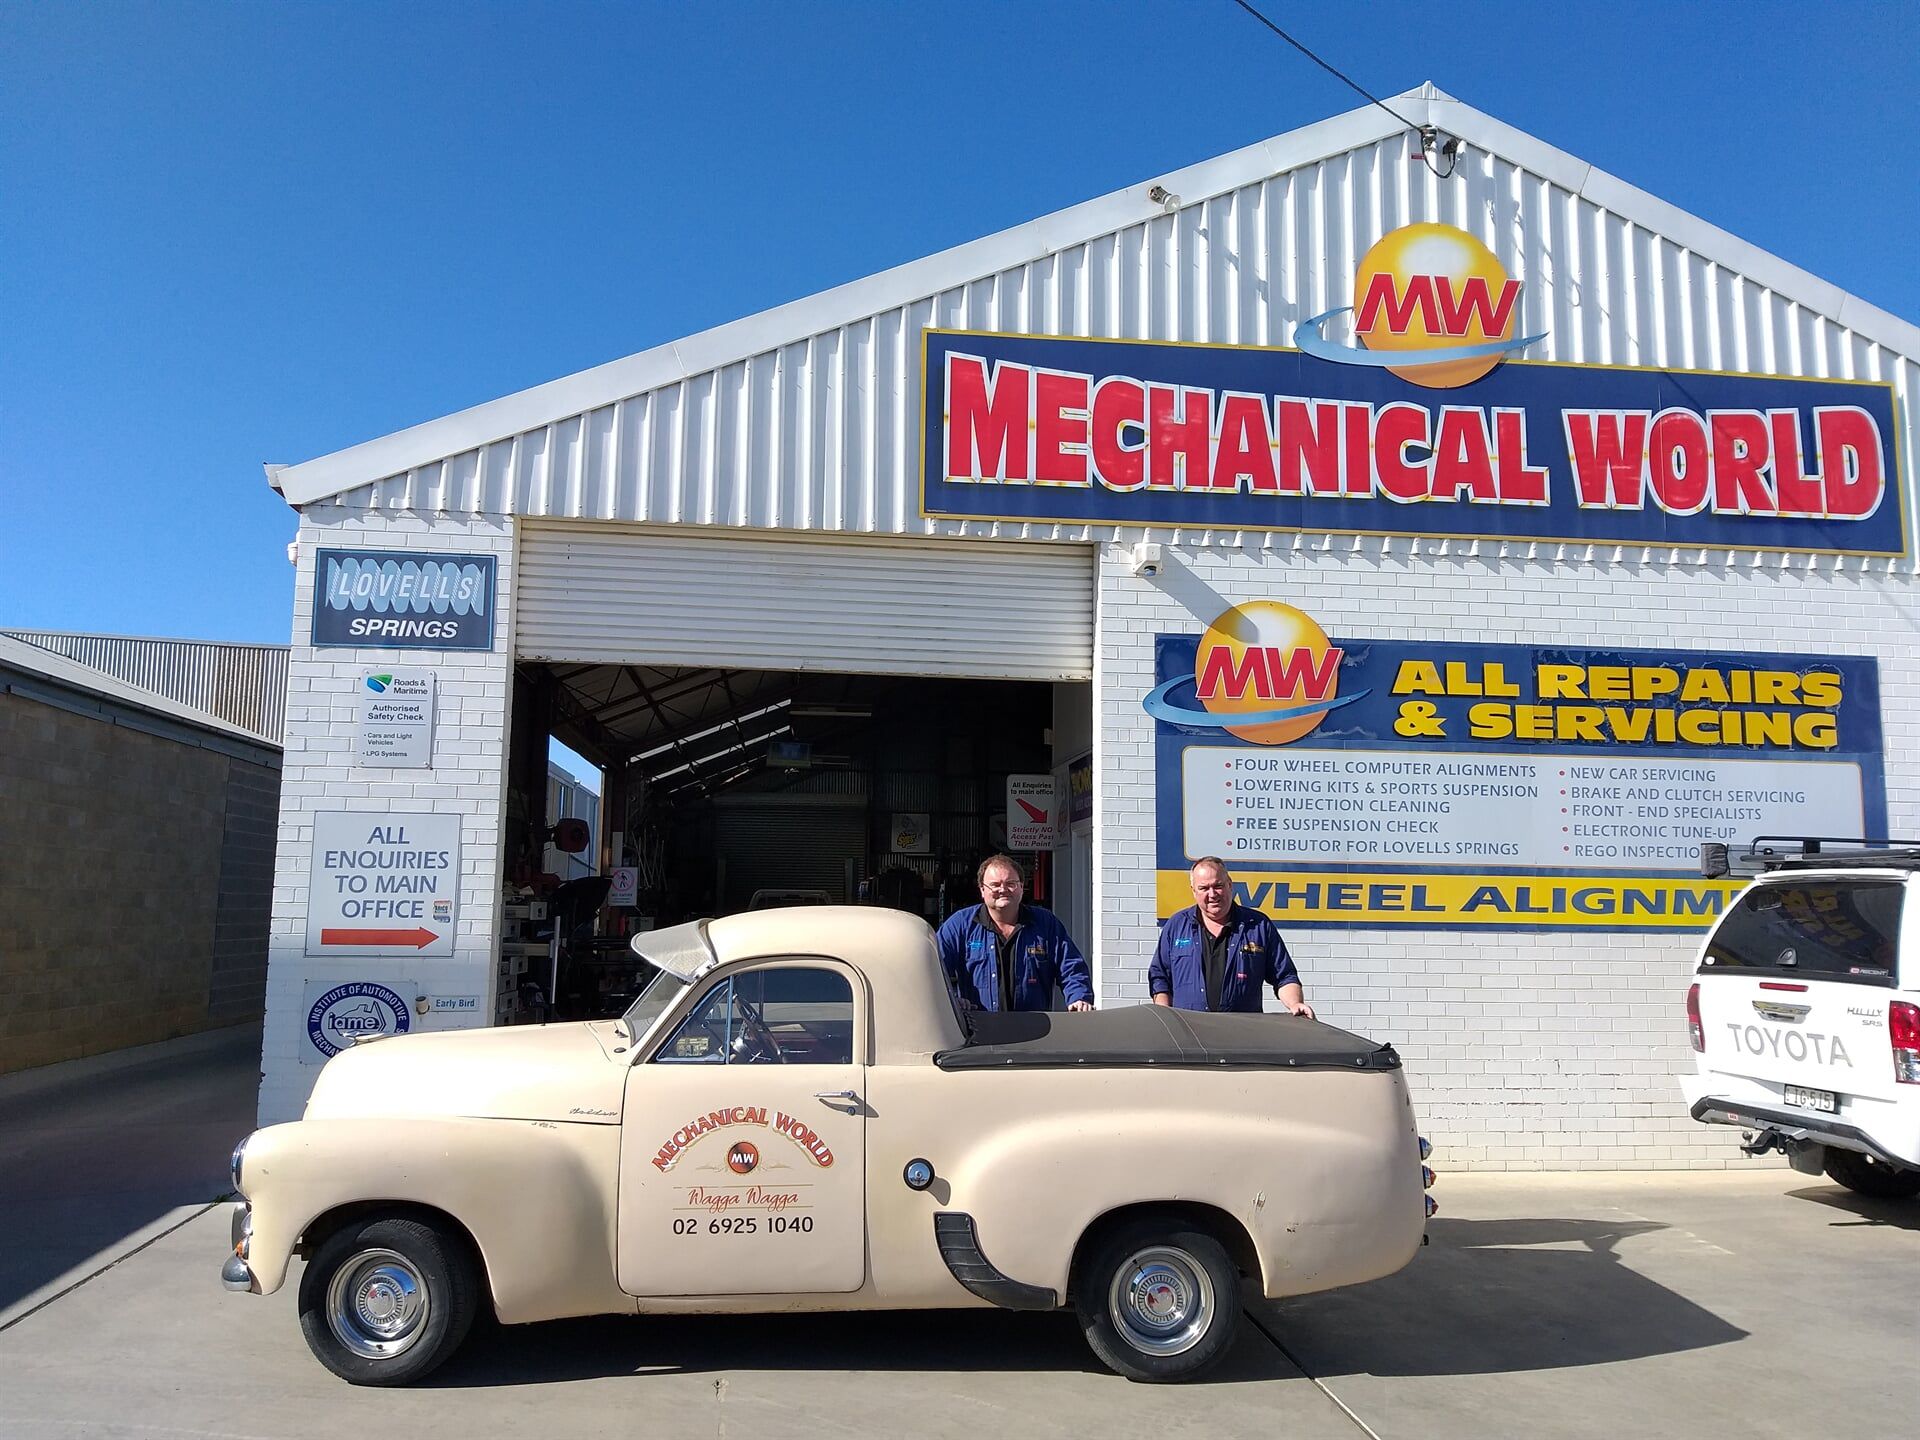 Mechanical World — Mechanical World in Wagga Wagga, NSW